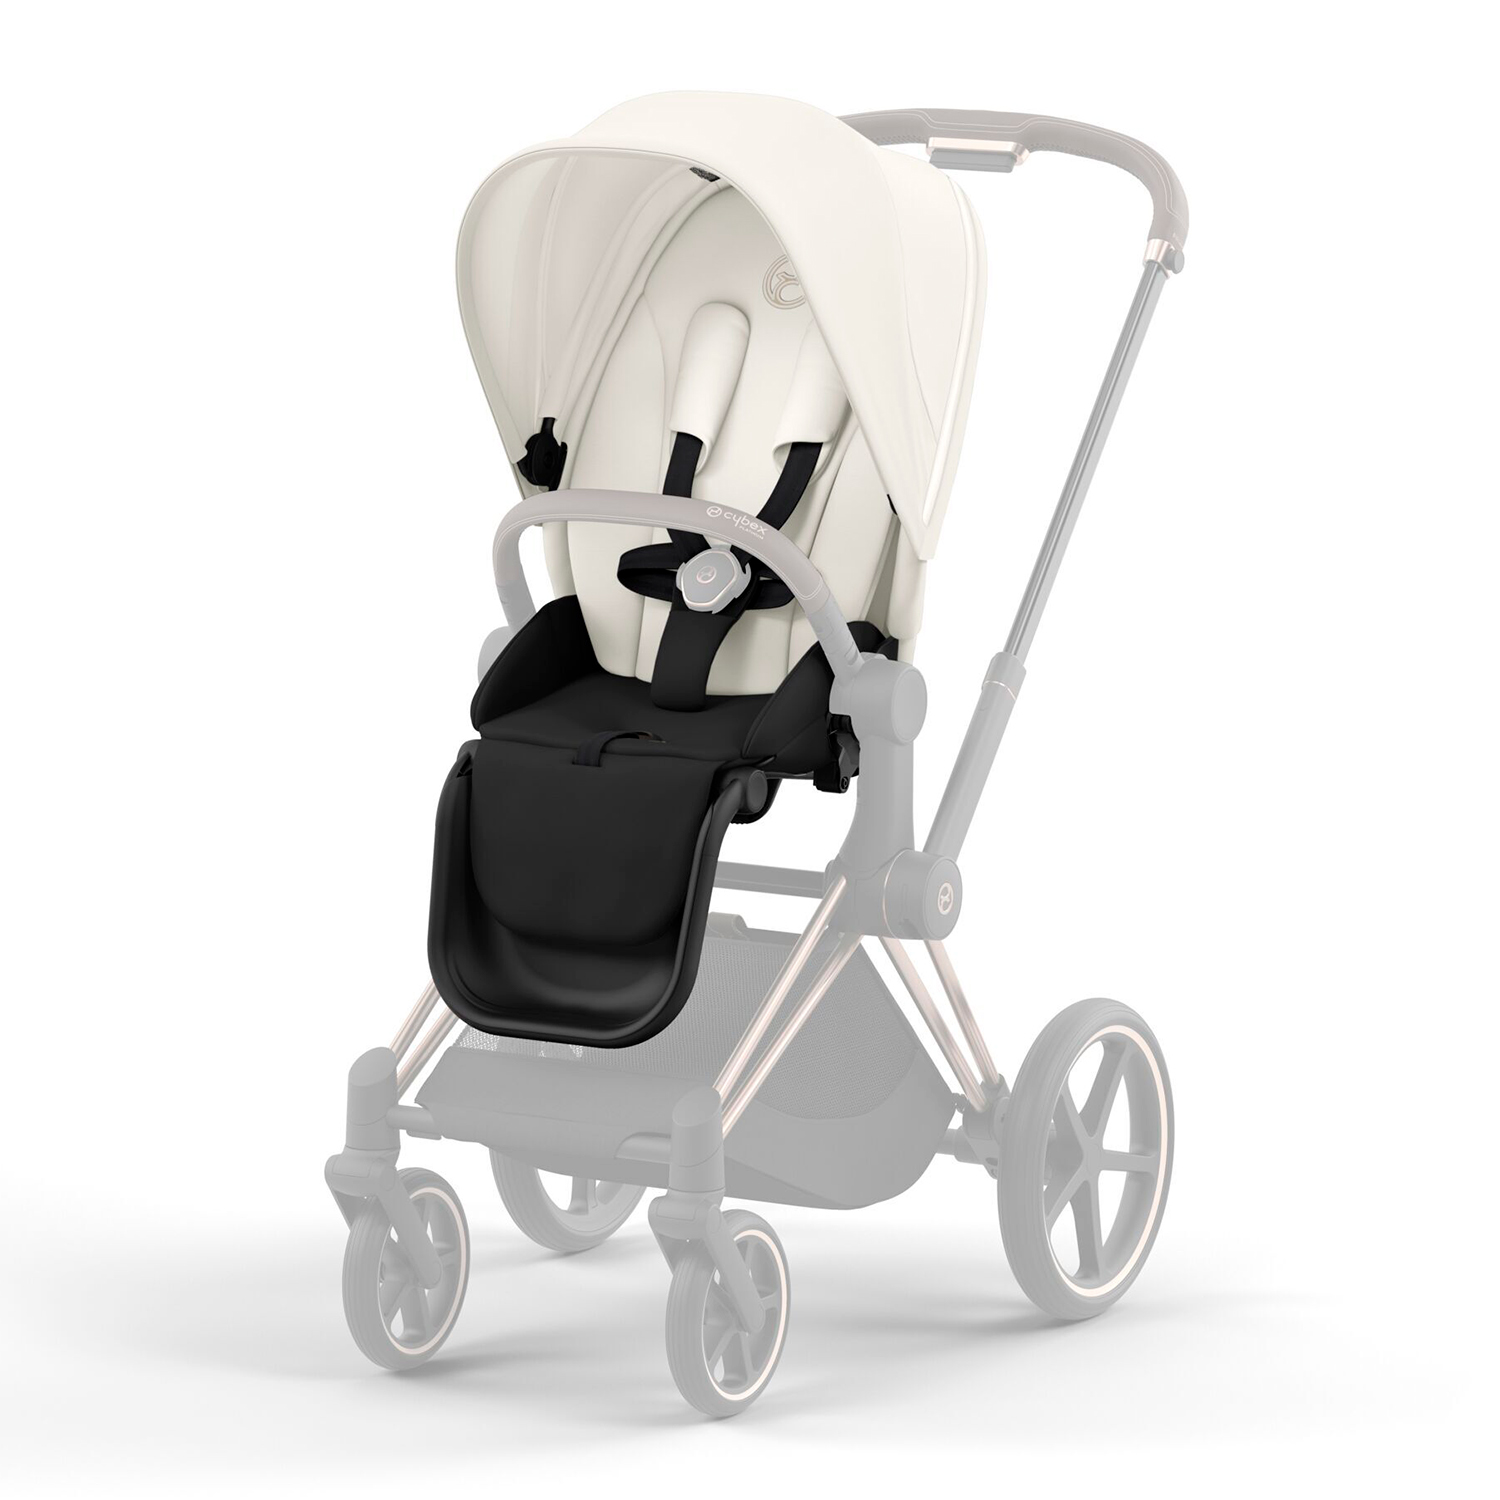 Набор чехлов прогулочного блока для коляски Priam IV Off White CYBEX cybex подножка для старшего ребёнка к коляске priam balios s 2019